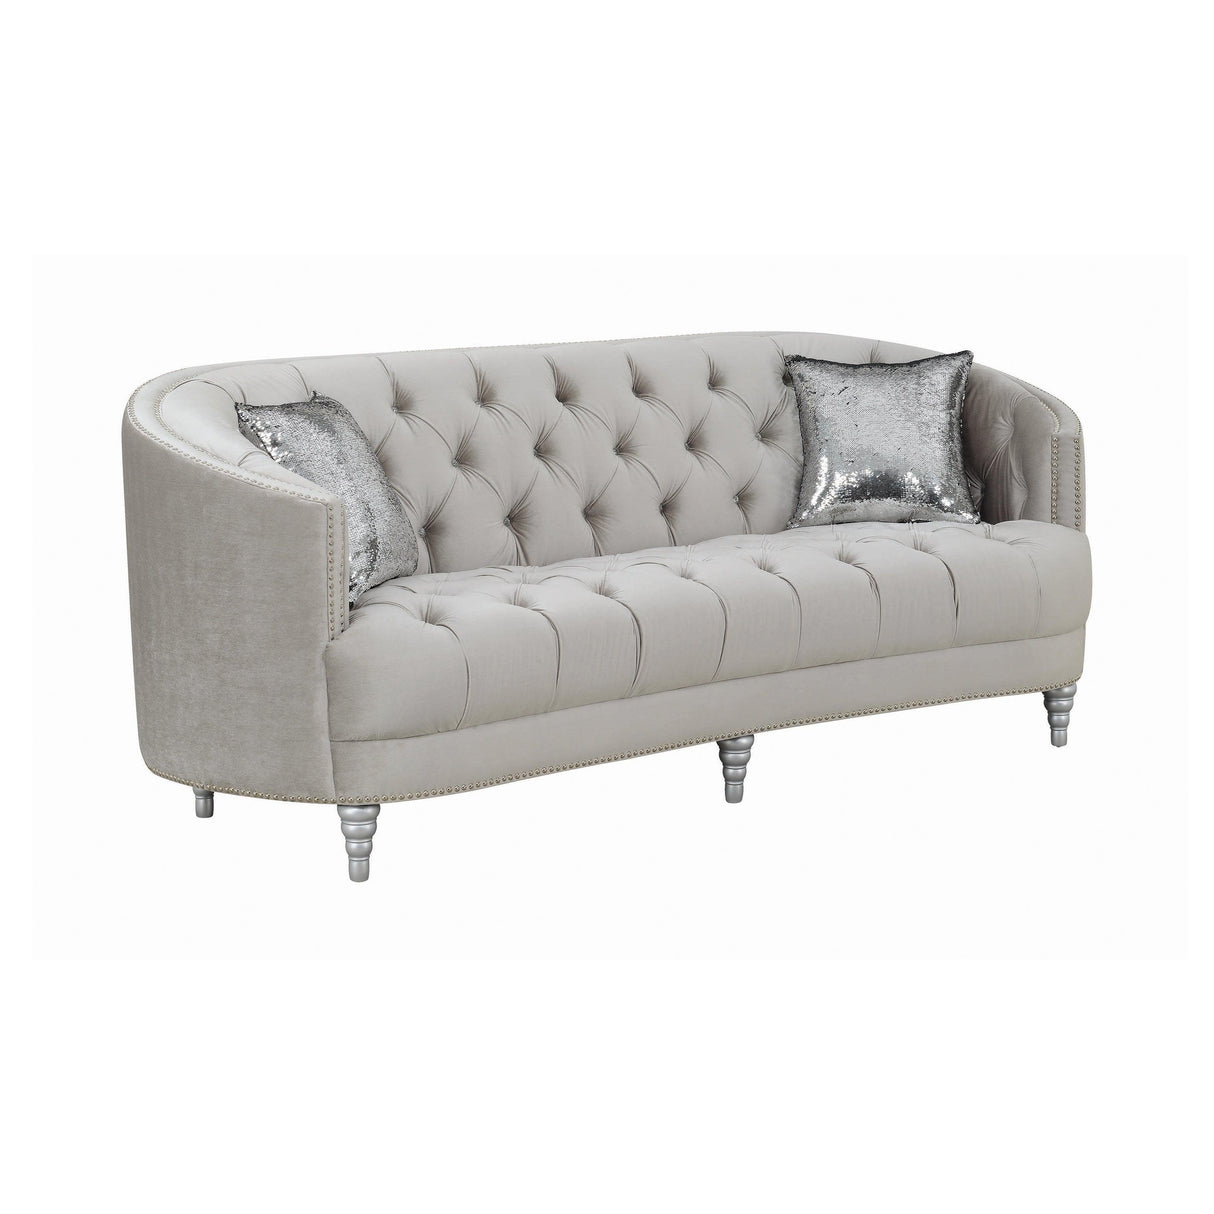 Avonlea Sloped Arm Tufted Sofa Gray by Coaster Furniture Coaster Furniture